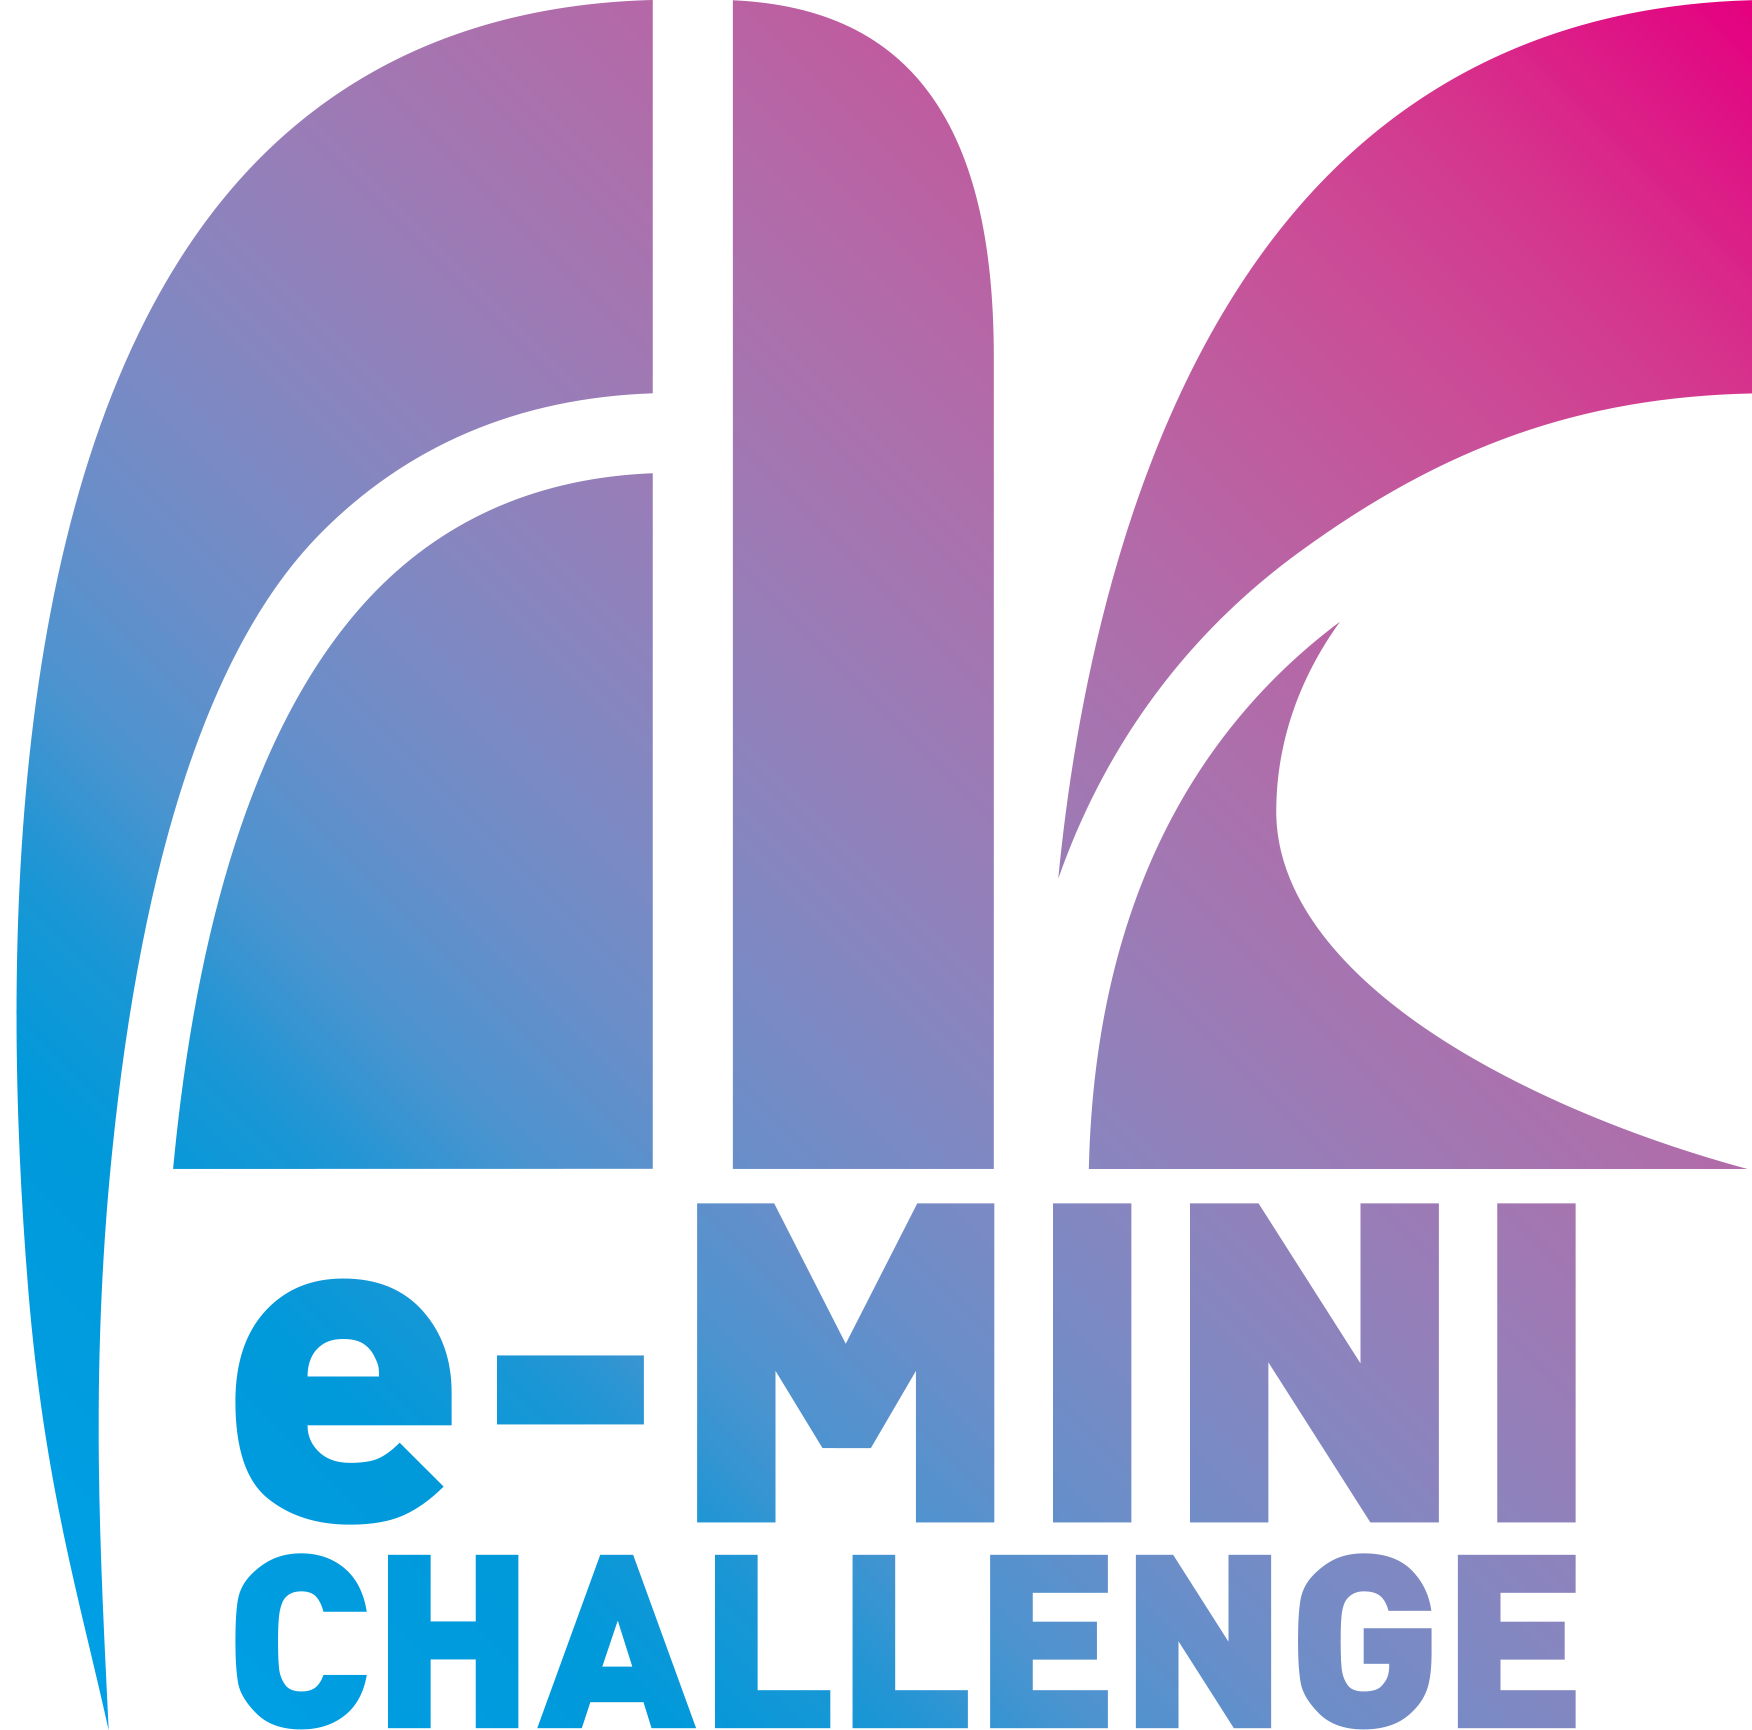 e-MINI CHALLENGE® 2021 S1 Rd.6 A/B ポイントランキング公開